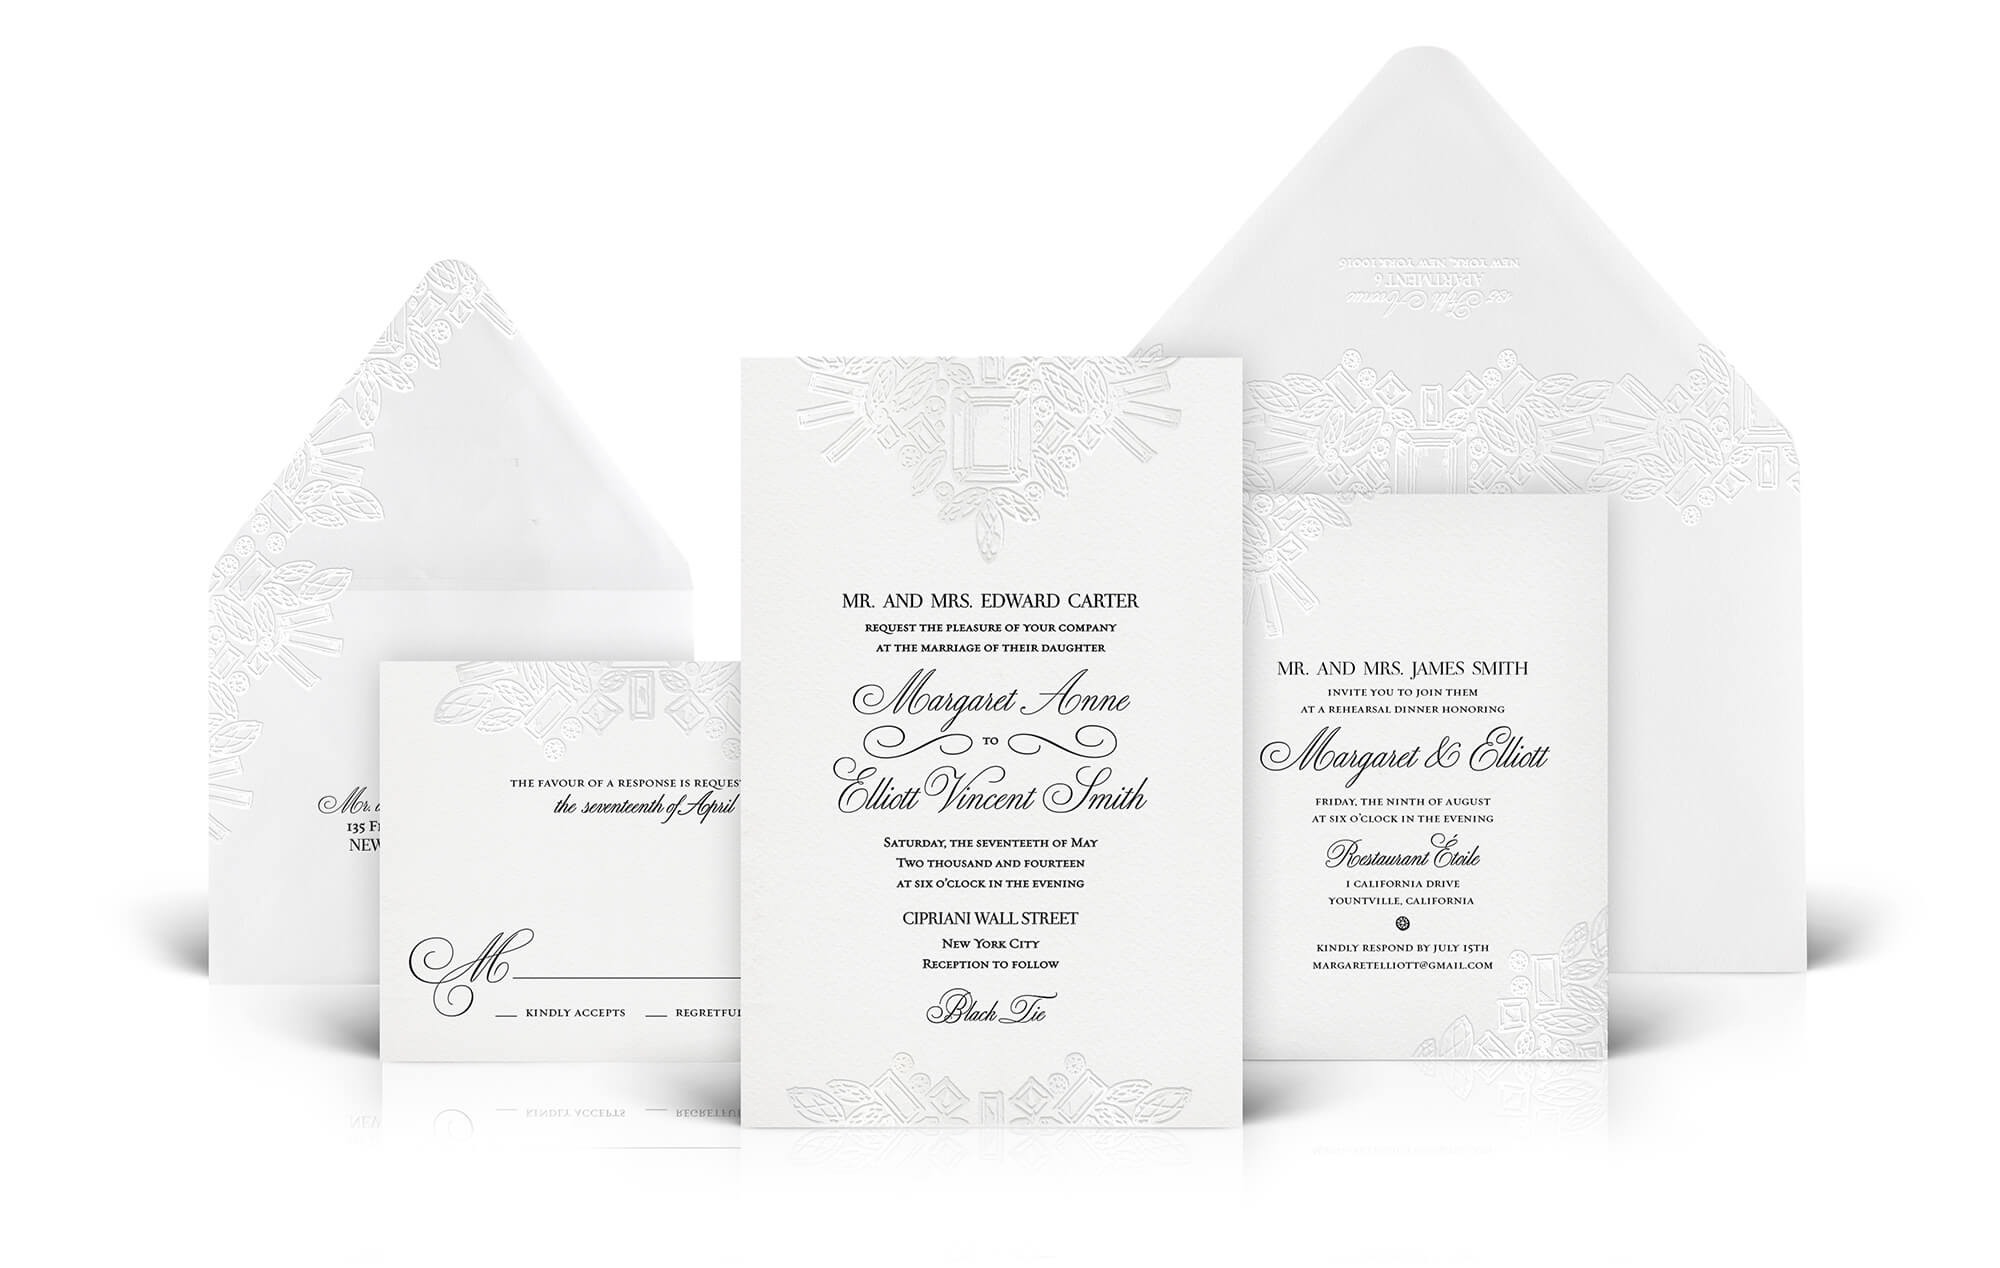 Crystal and jewel inspired wedding invitation